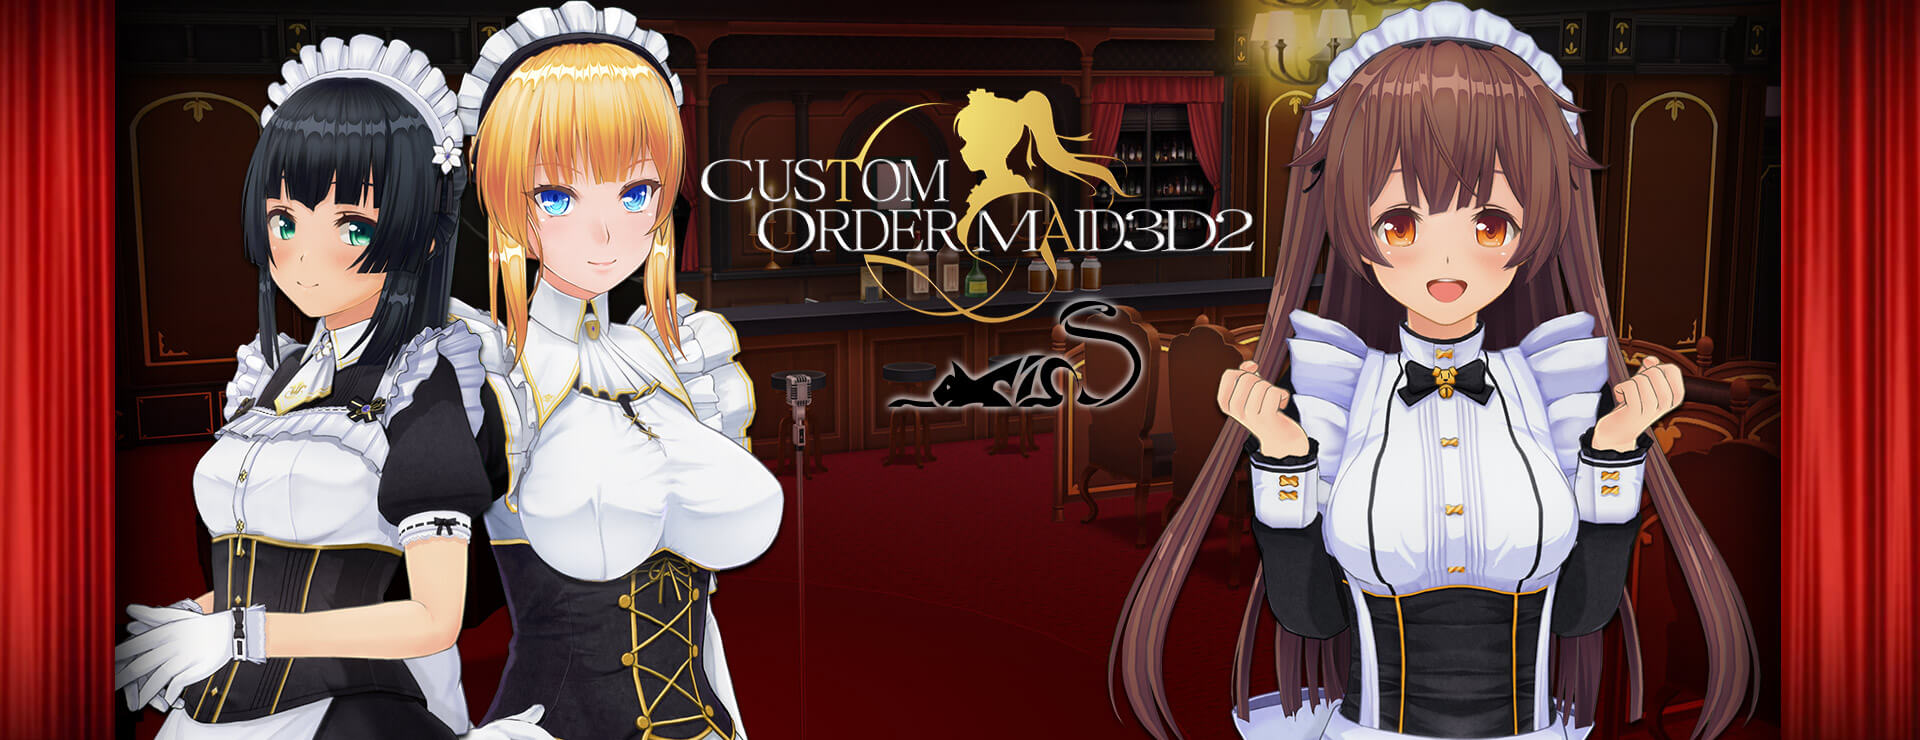 Custom Order Maid 3D2 Game - Simulation Gra